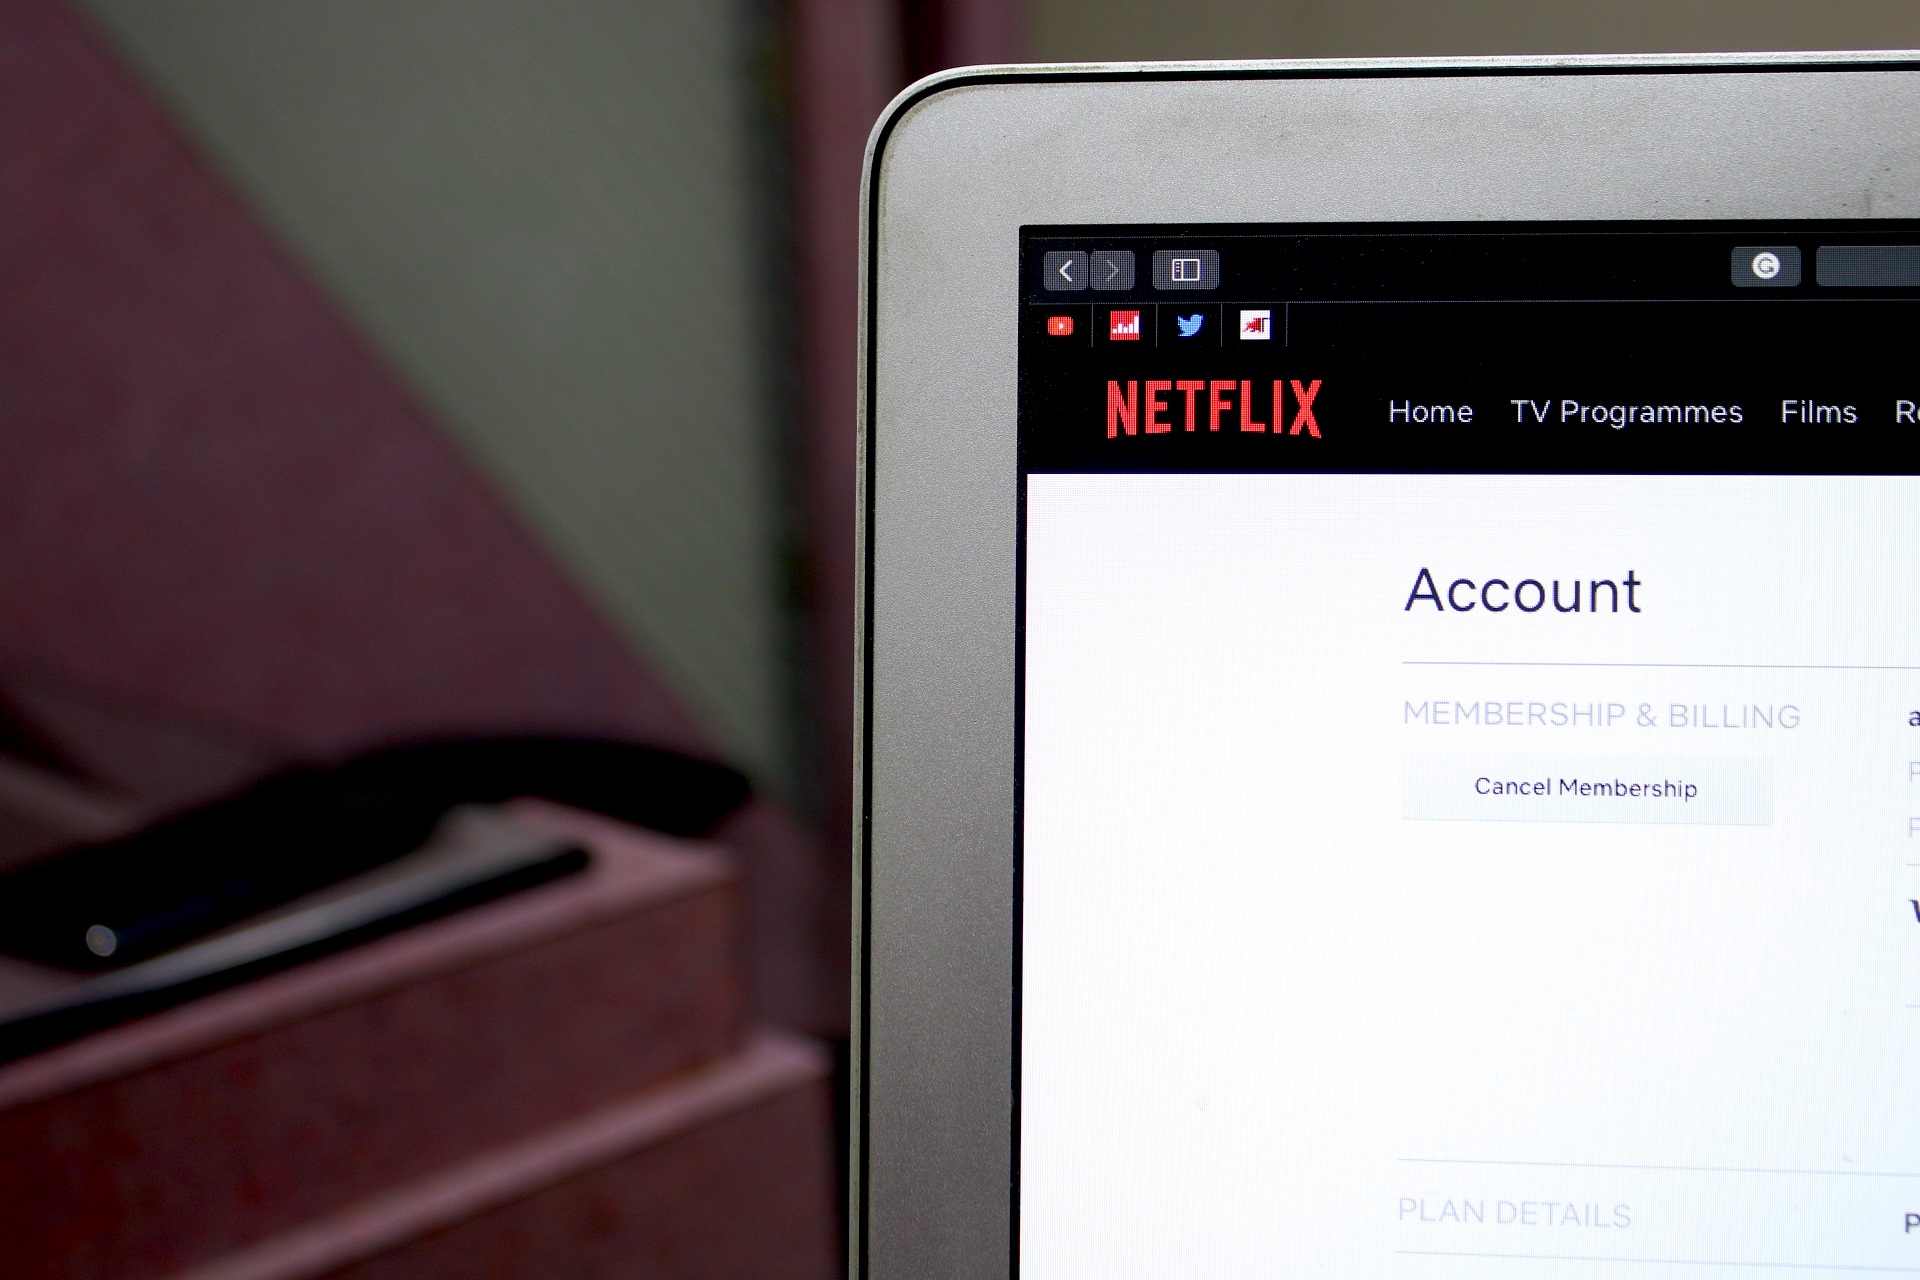 Complaints about Netflix billing, CRA issues order